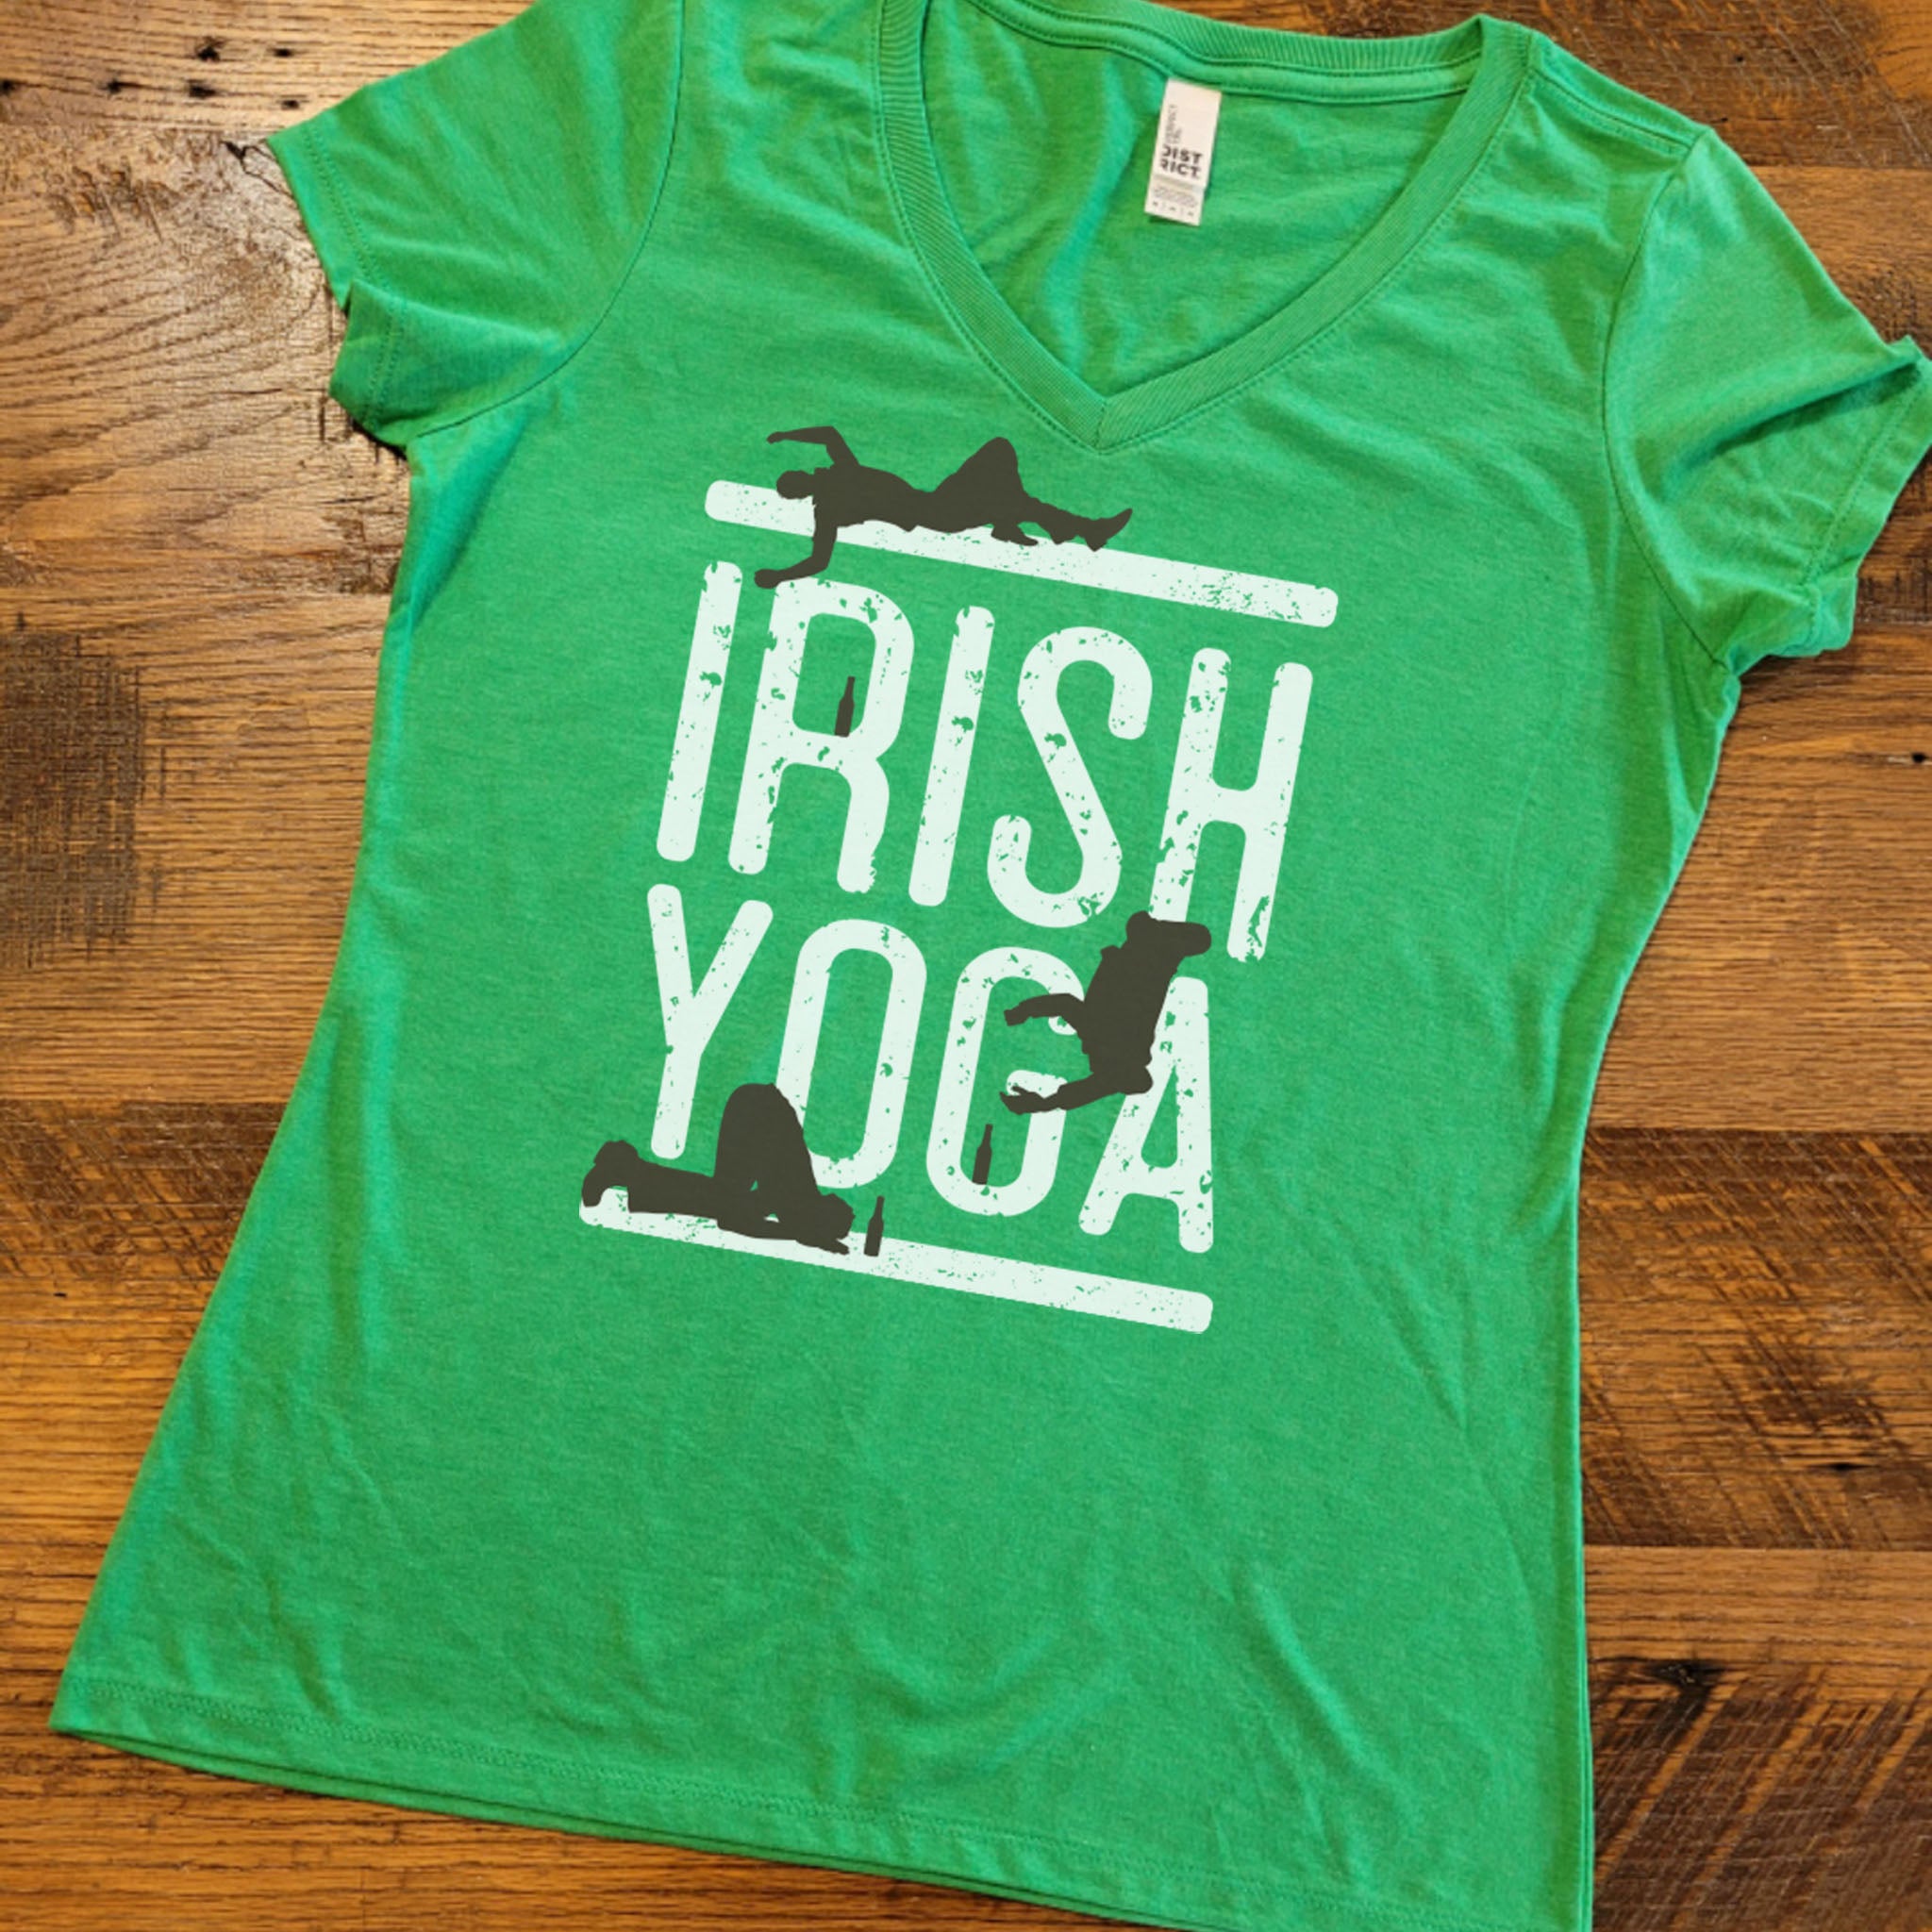 Irish Yoga St. Patrick's Day Shirt Ladies V or Unisex Crew